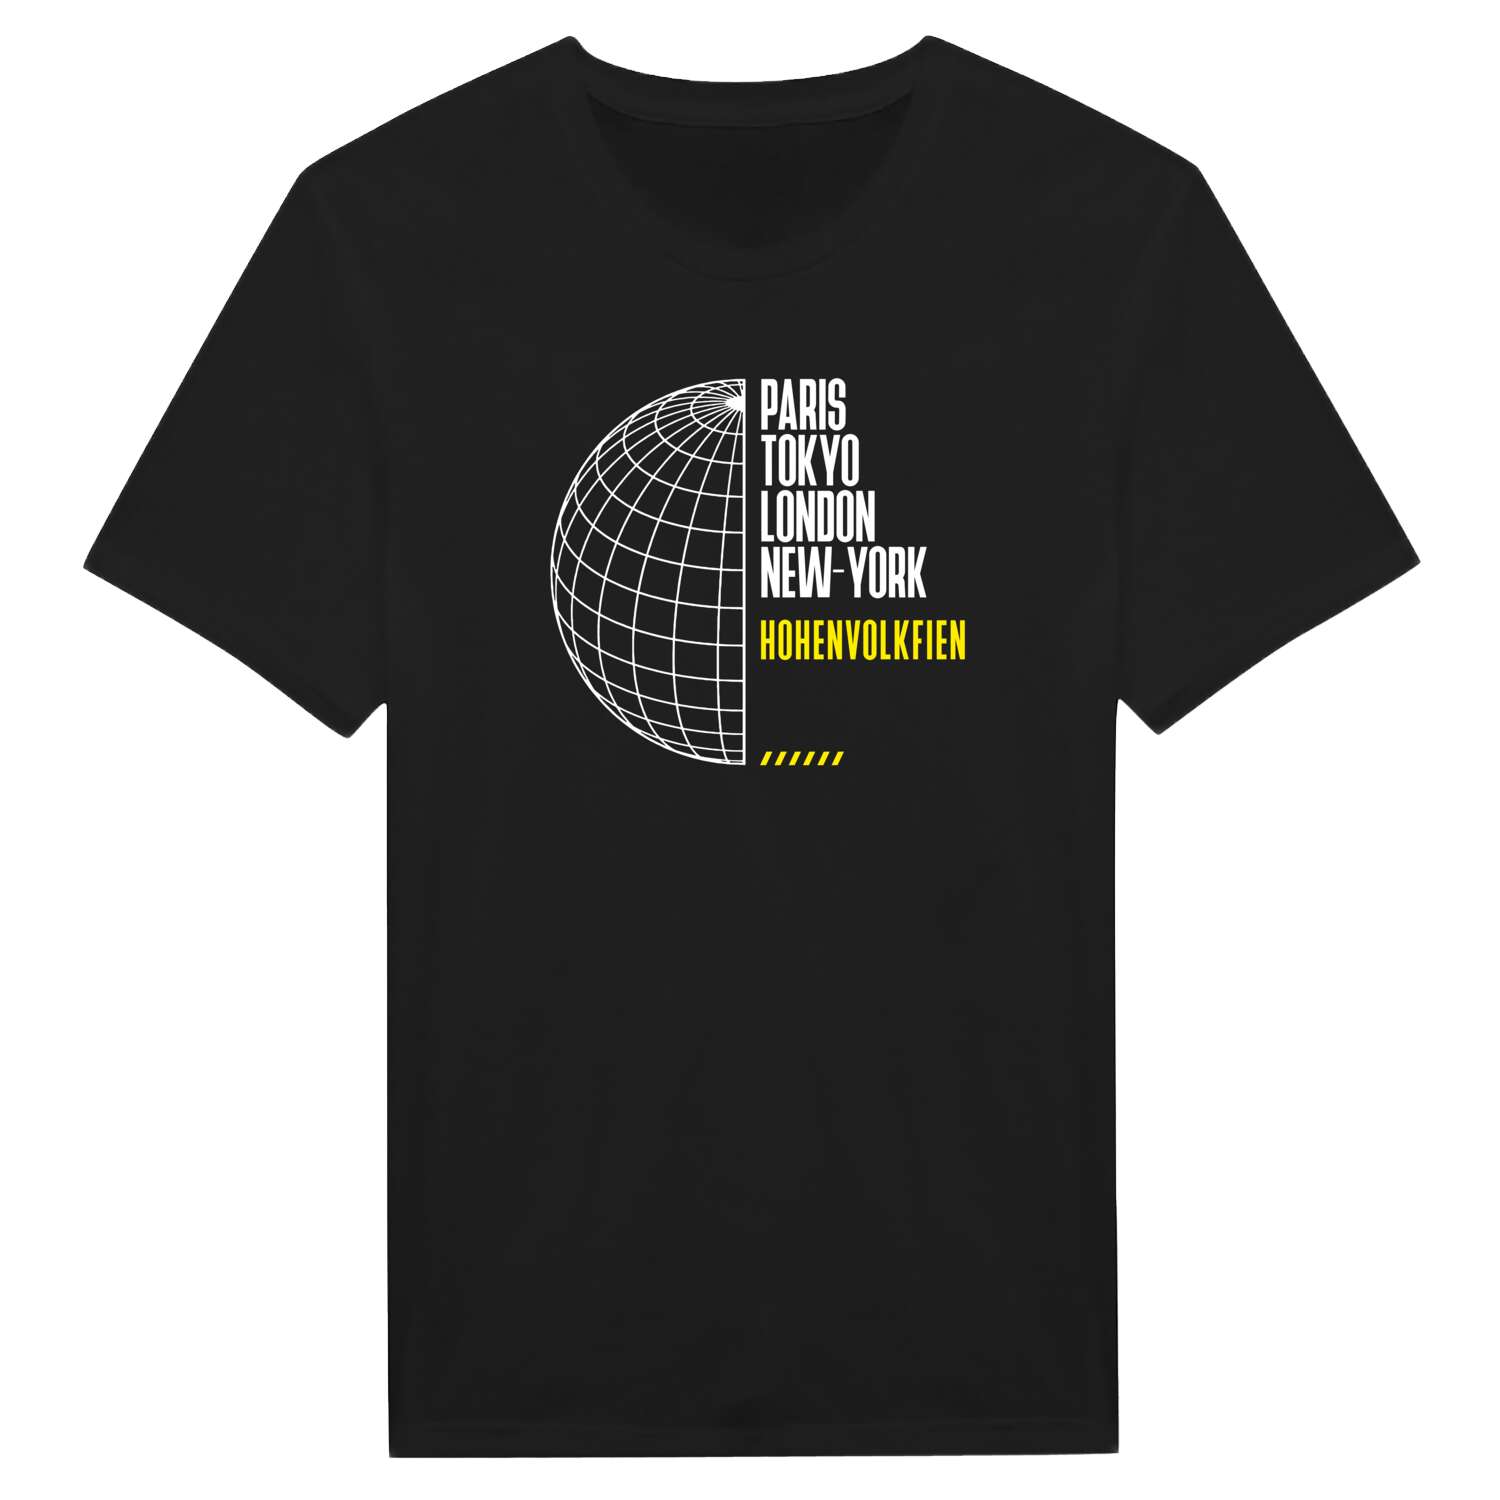 Hohenvolkfien T-Shirt »Paris Tokyo London«